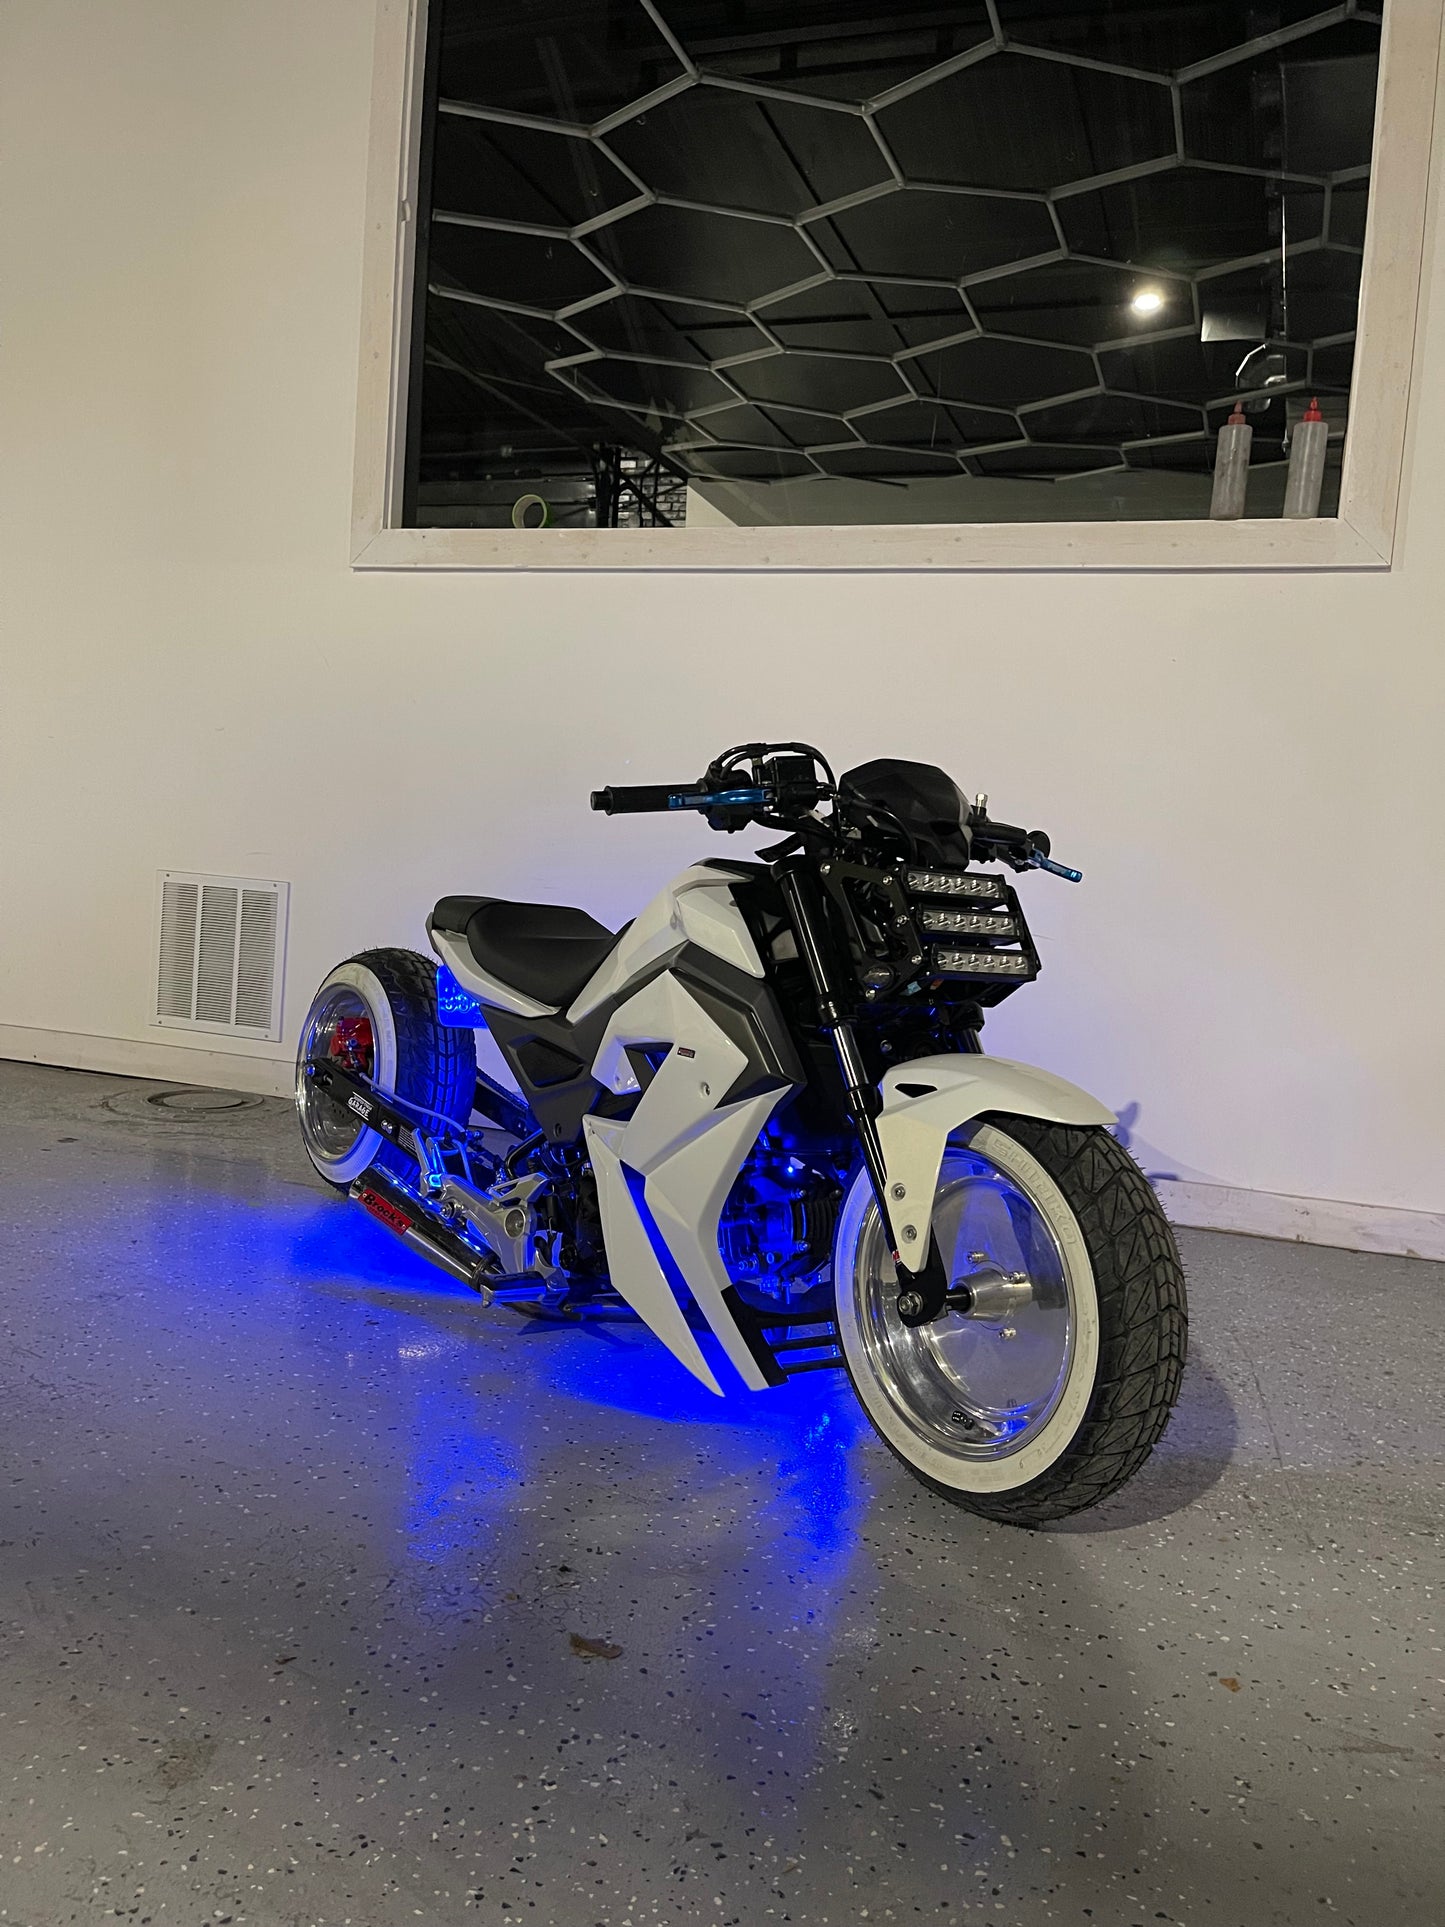 12pc LED Motorcycle lighting